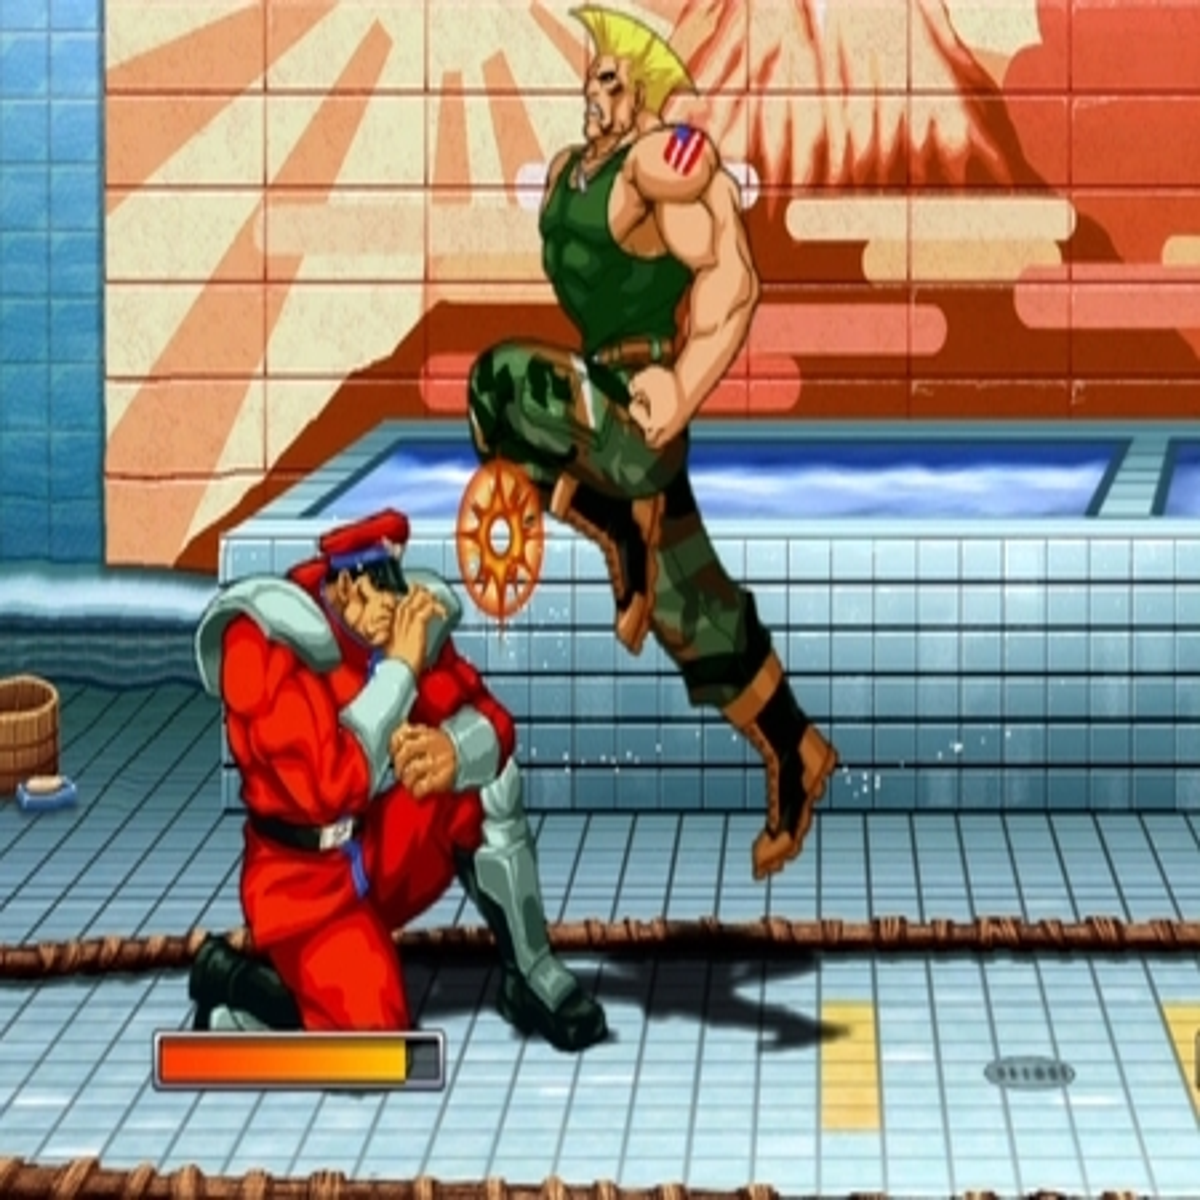 PS3 Cheats - Super Street Fighter II Turbo HD Remix Guide - IGN